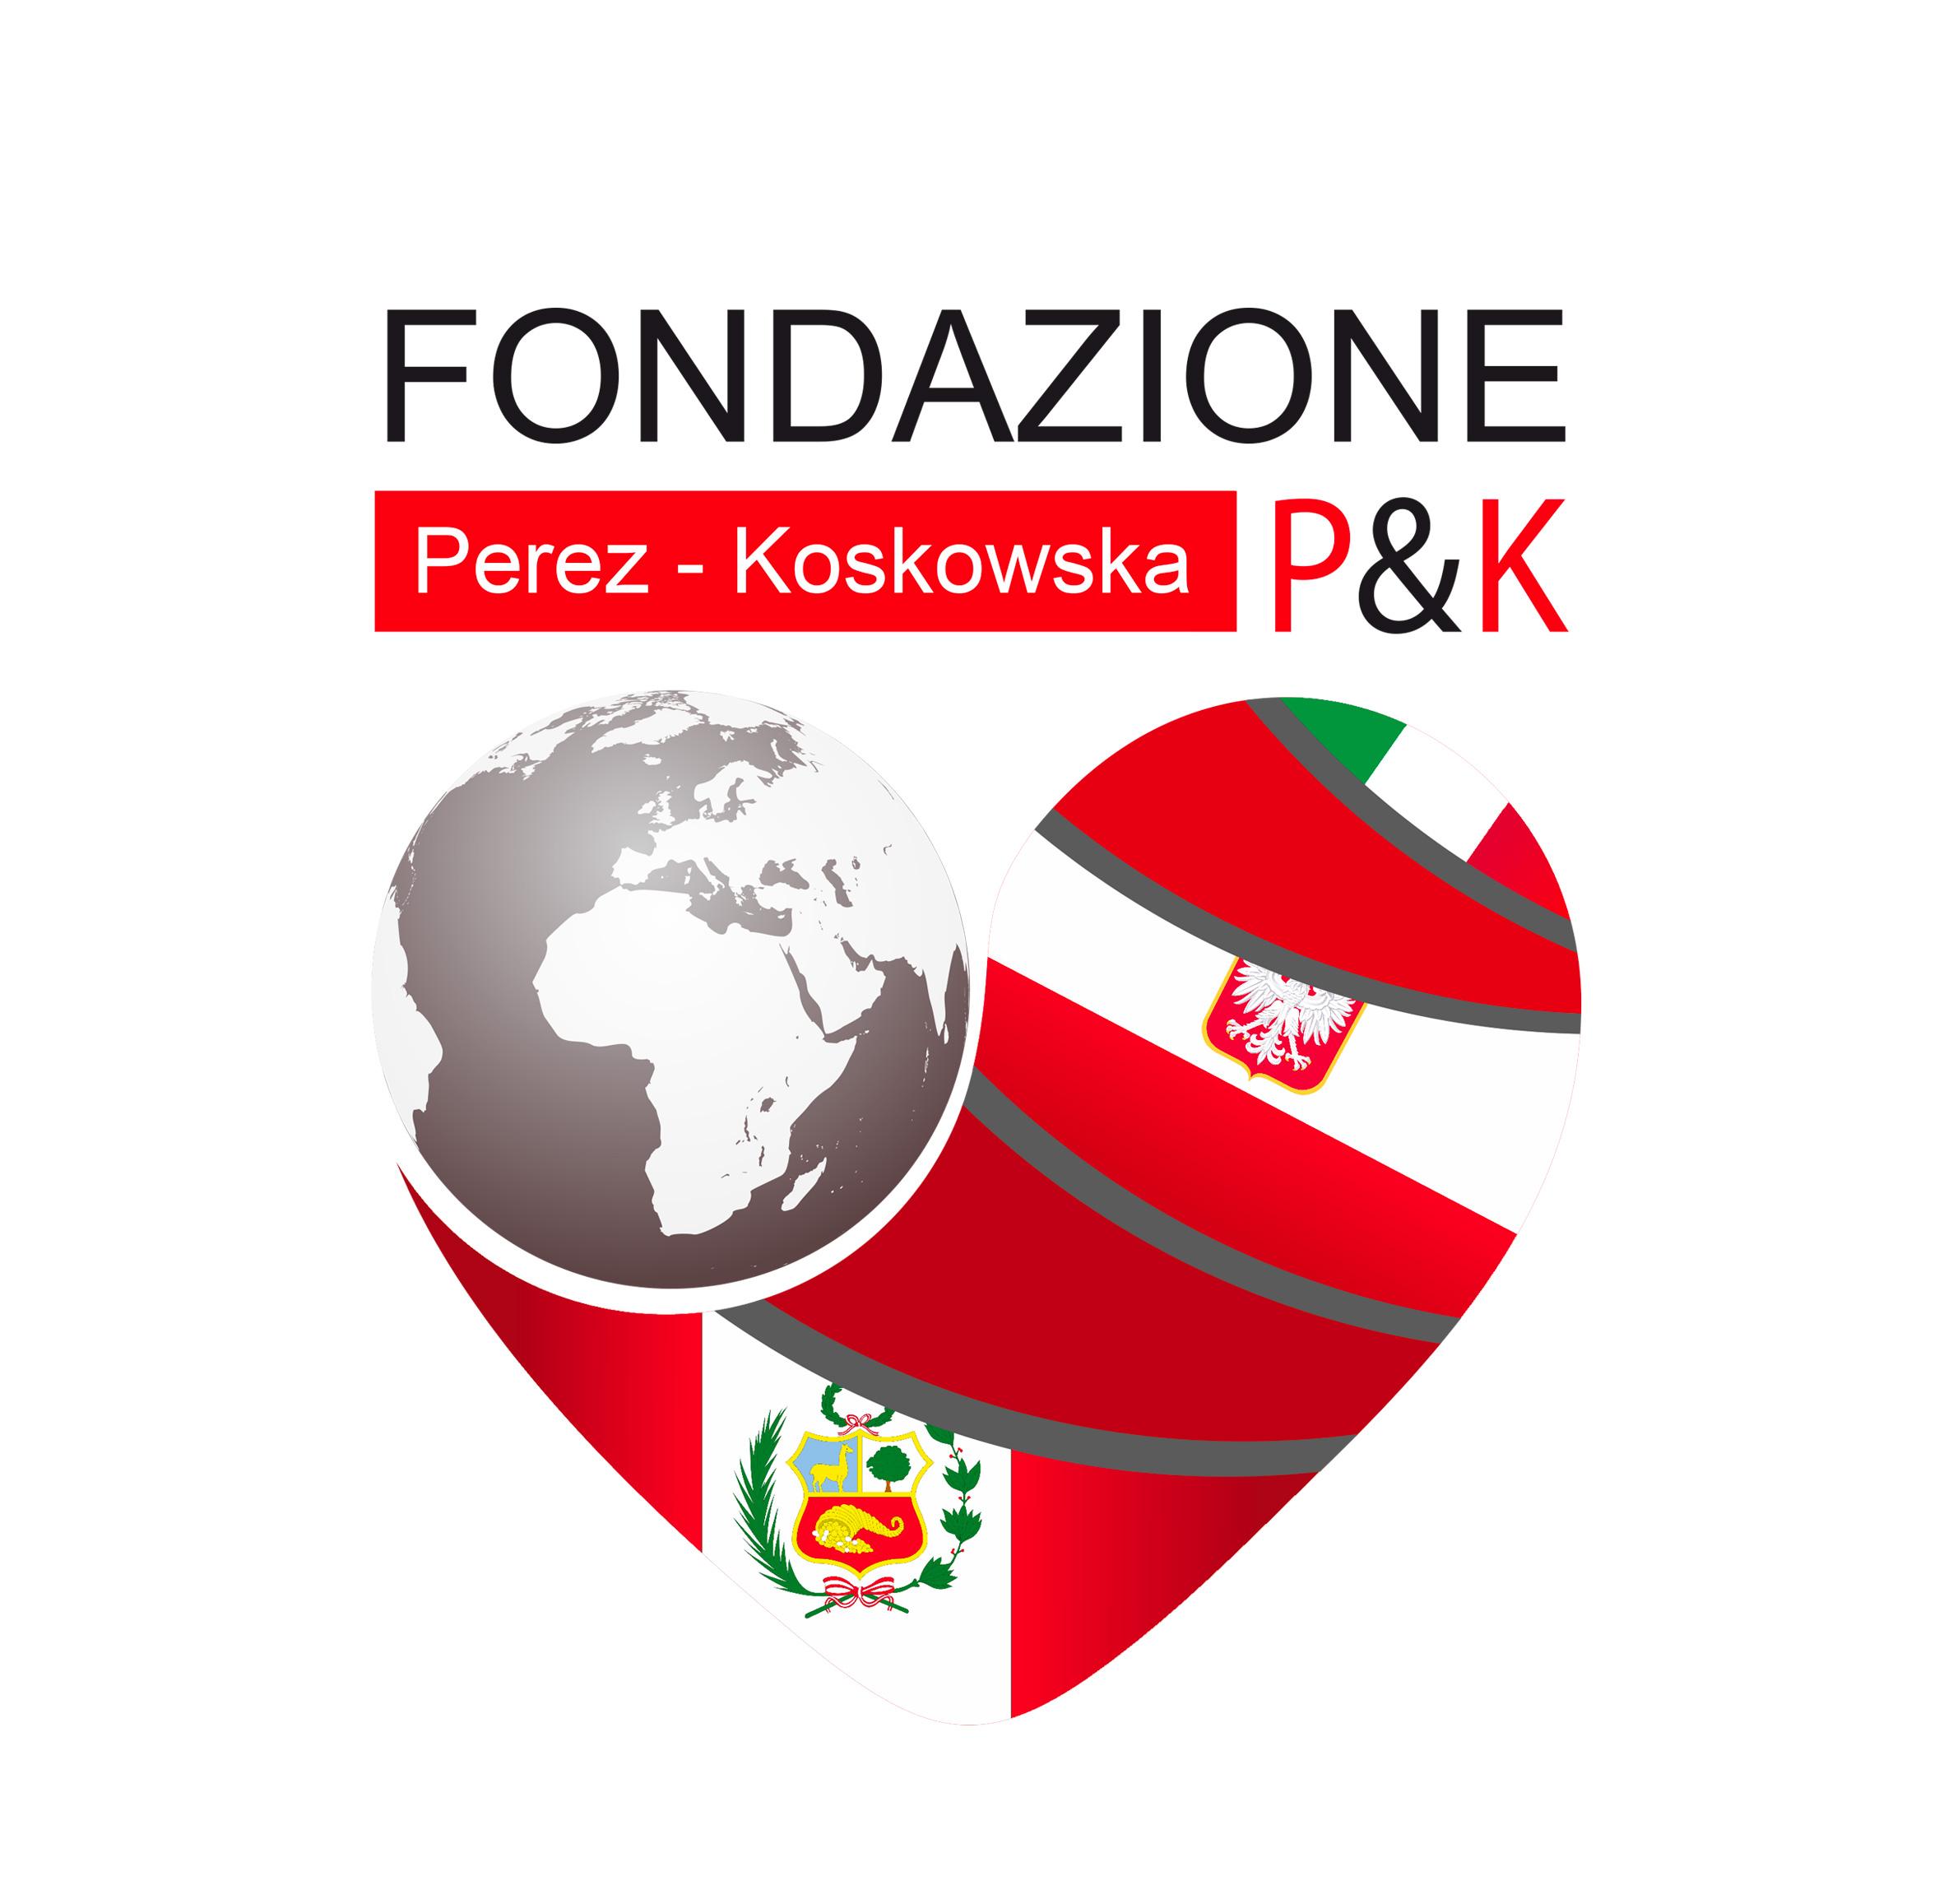 Fondazione Perez-Koskowska